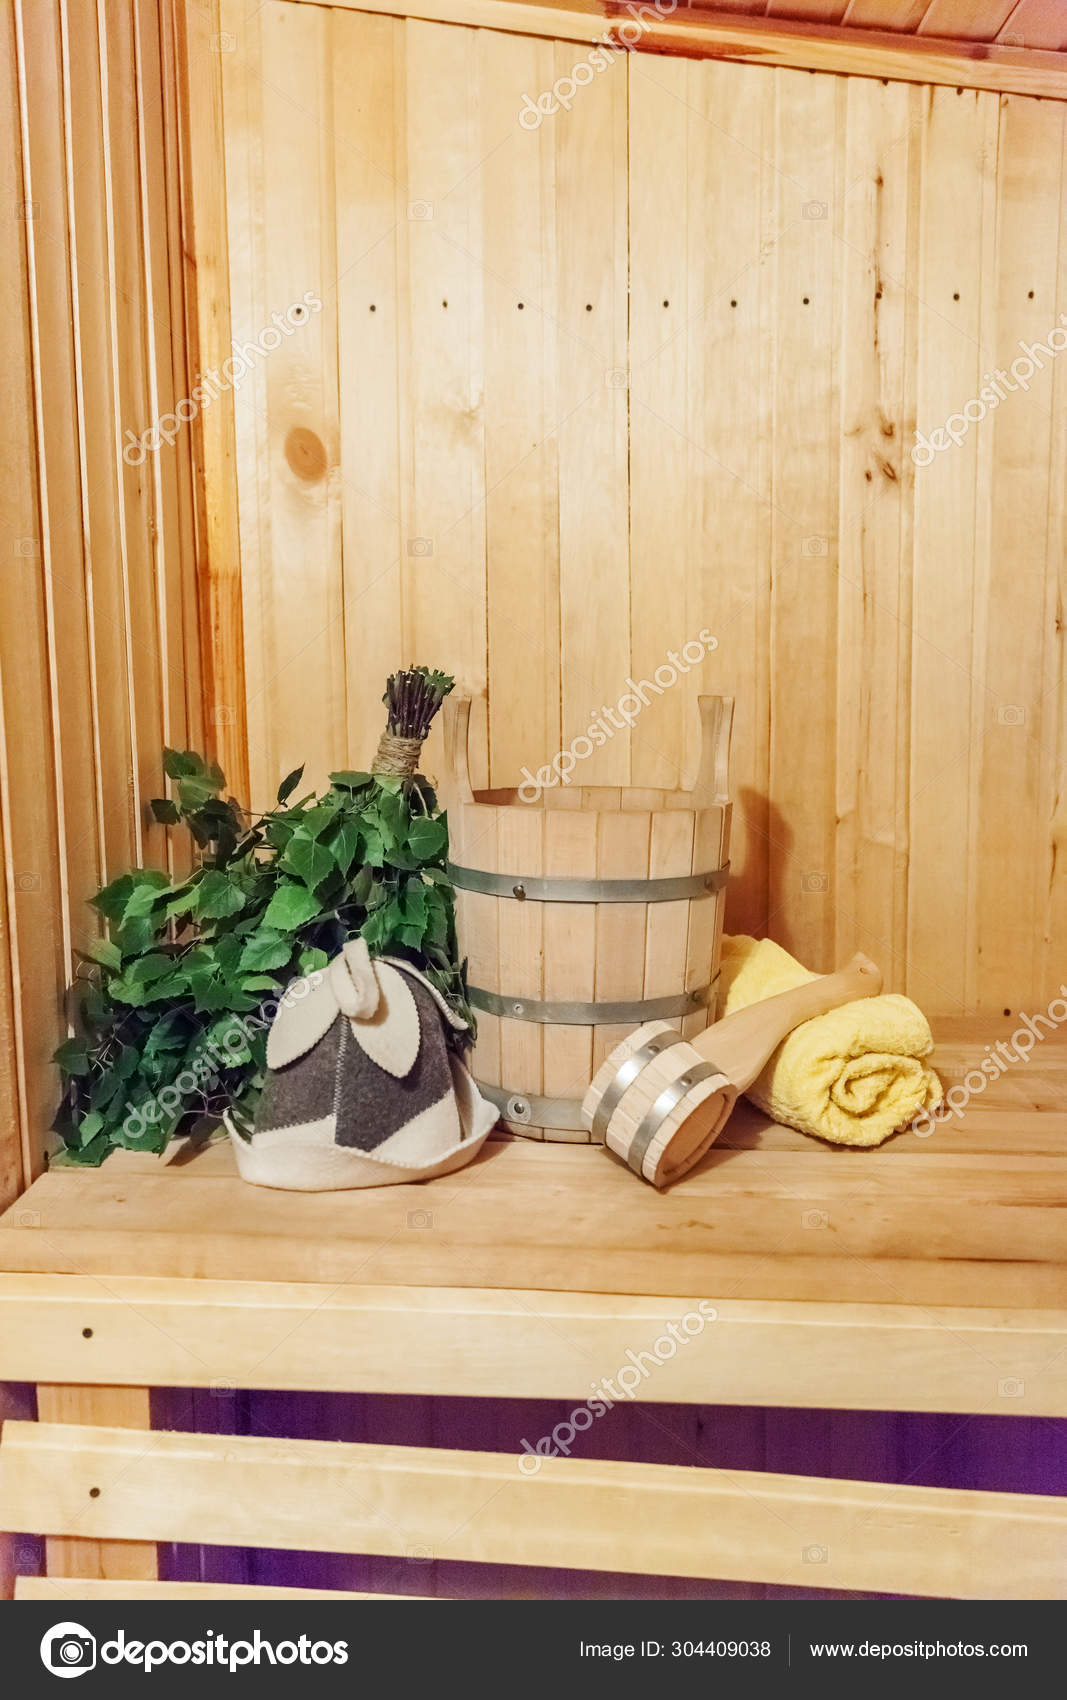 Interior details Finnish sauna steam room with traditional sauna basin birch broom scoop felt towel Stock Photo ©Luljo 304409038